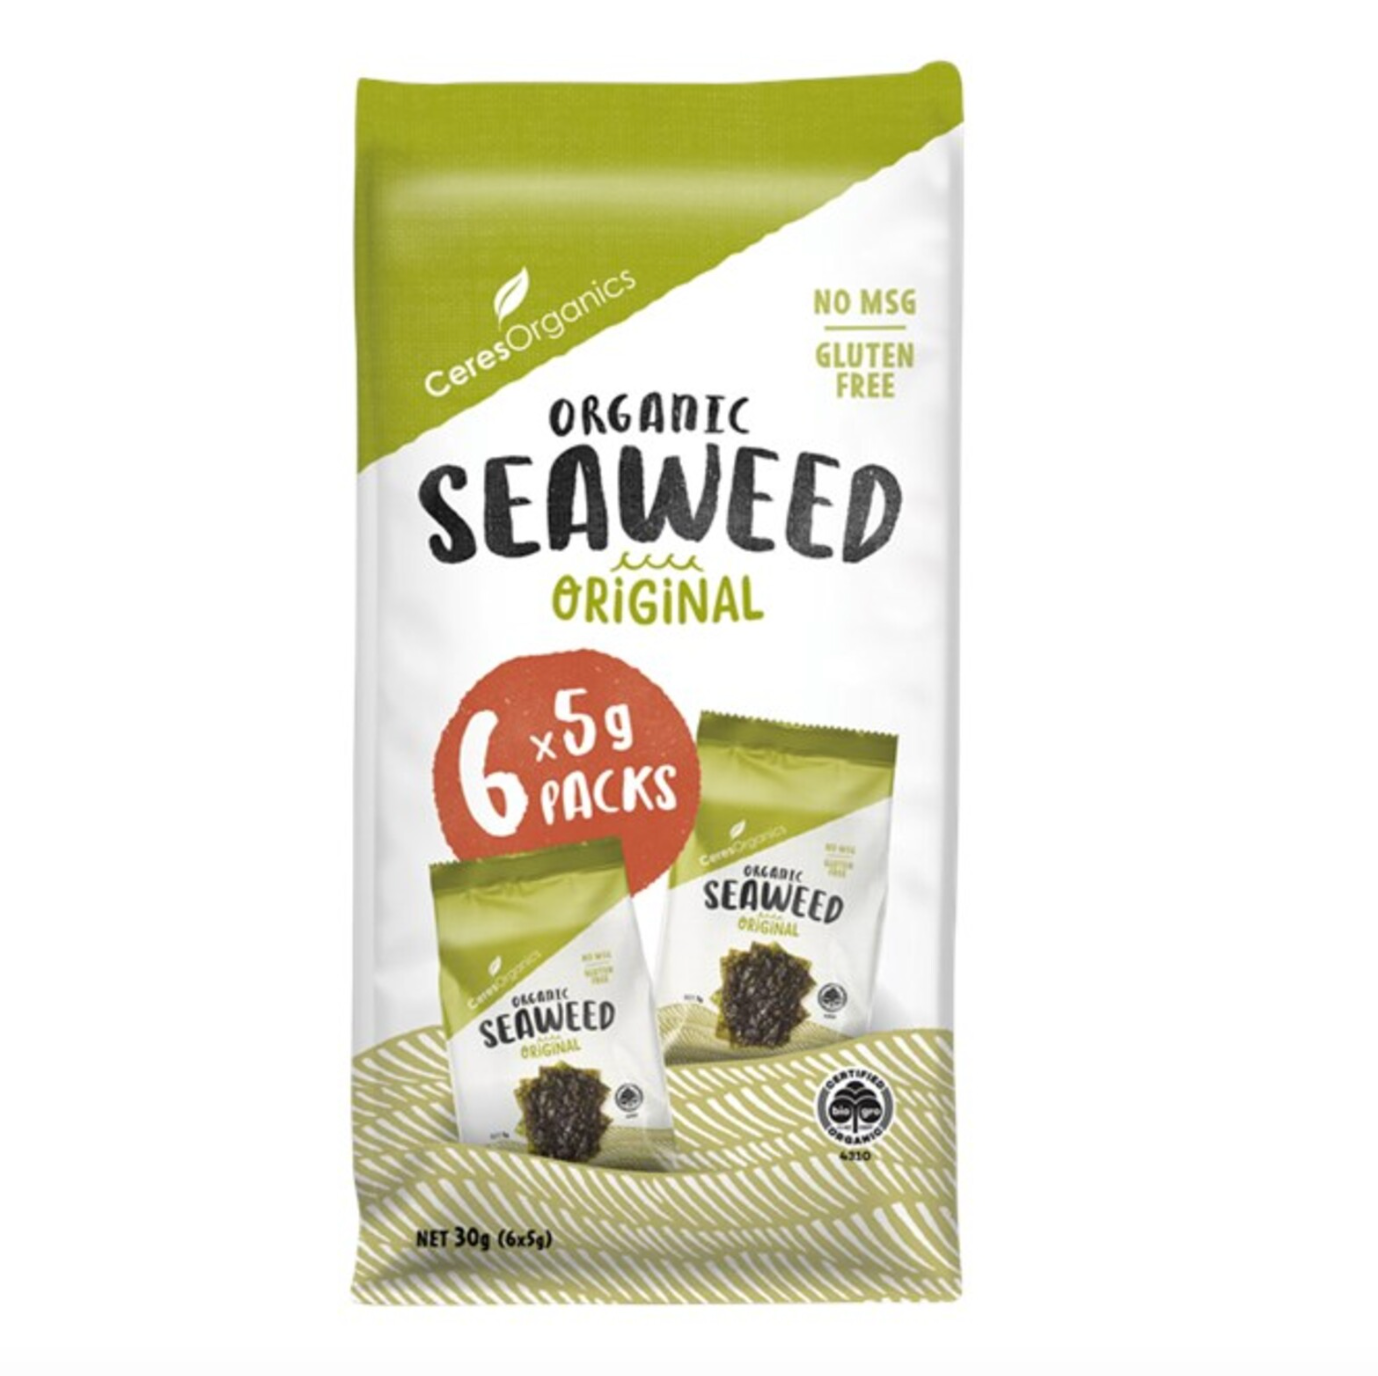 Original Seaweed Snack Multi Pack 6x5g - Ceres Organics